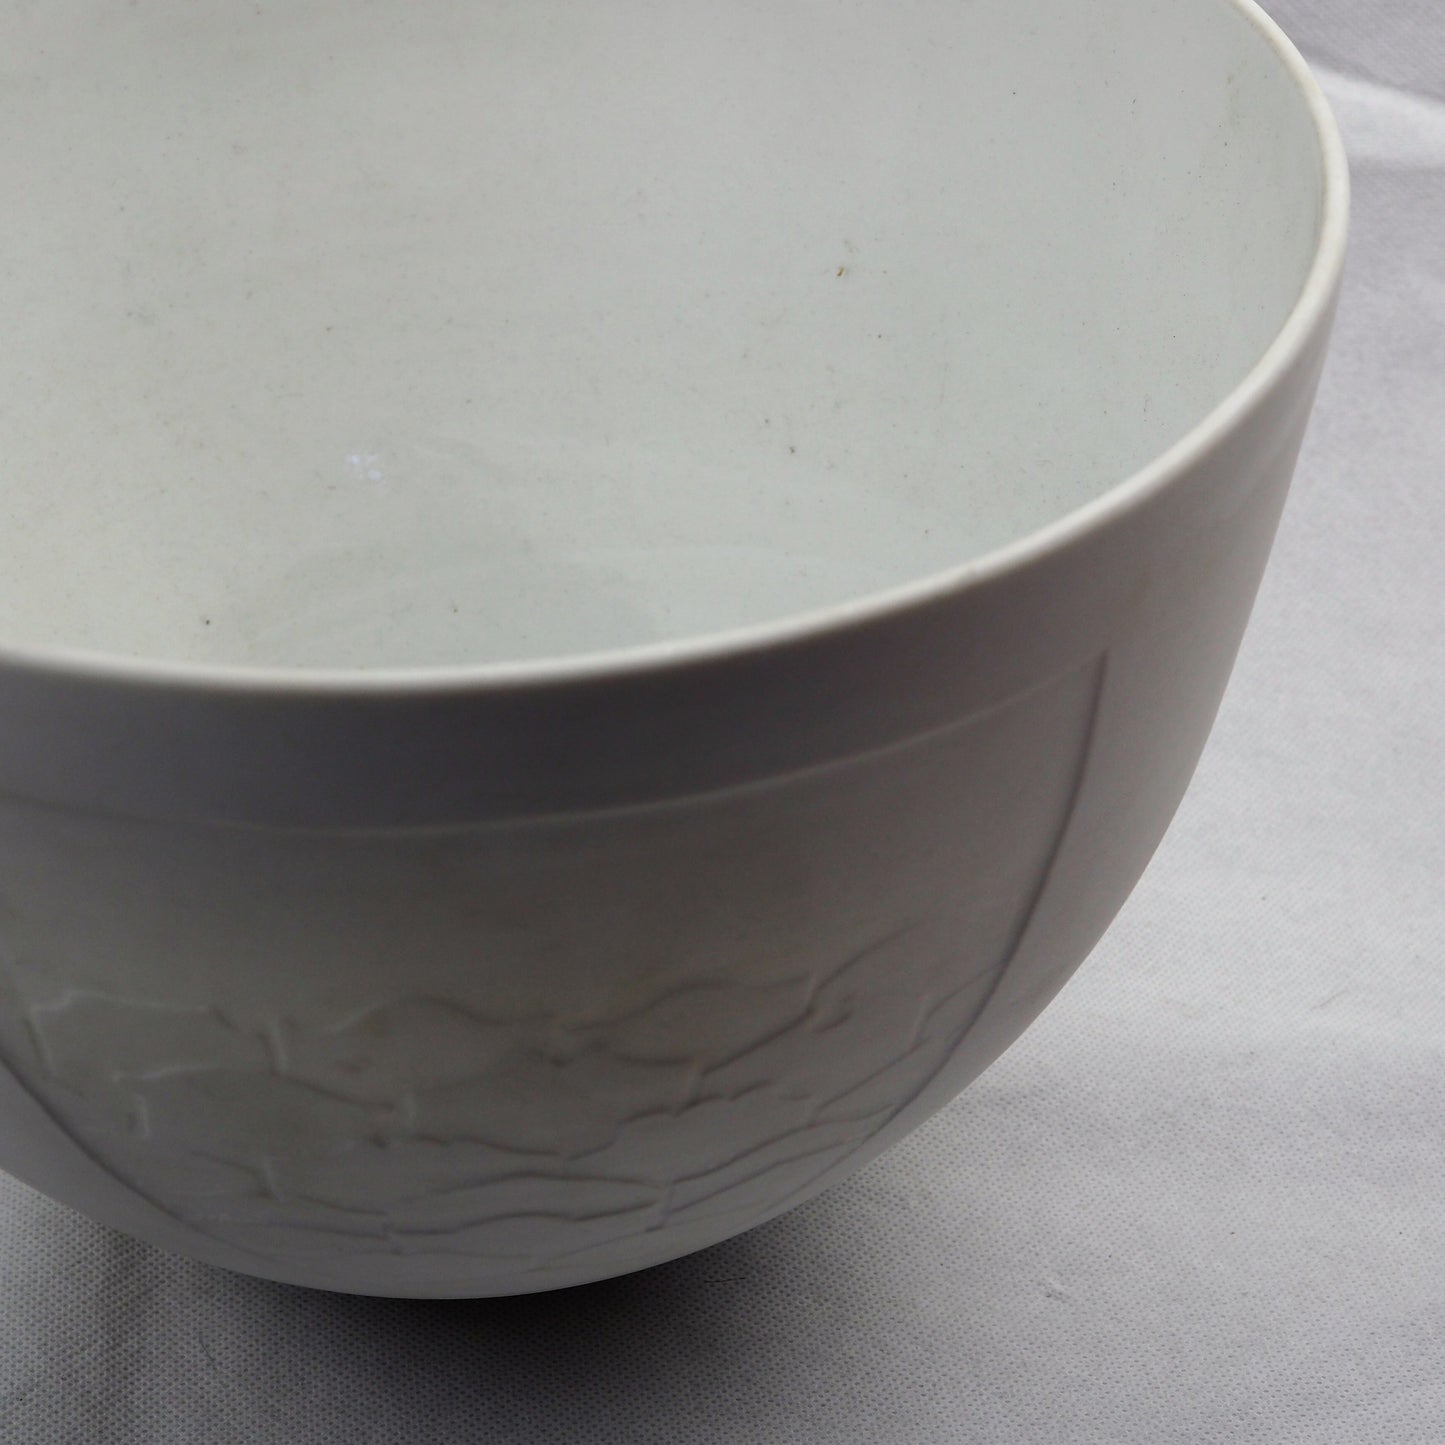 Les Blakebrough – Porcelain Bowl | Les Blakebrough | Primavera Gallery